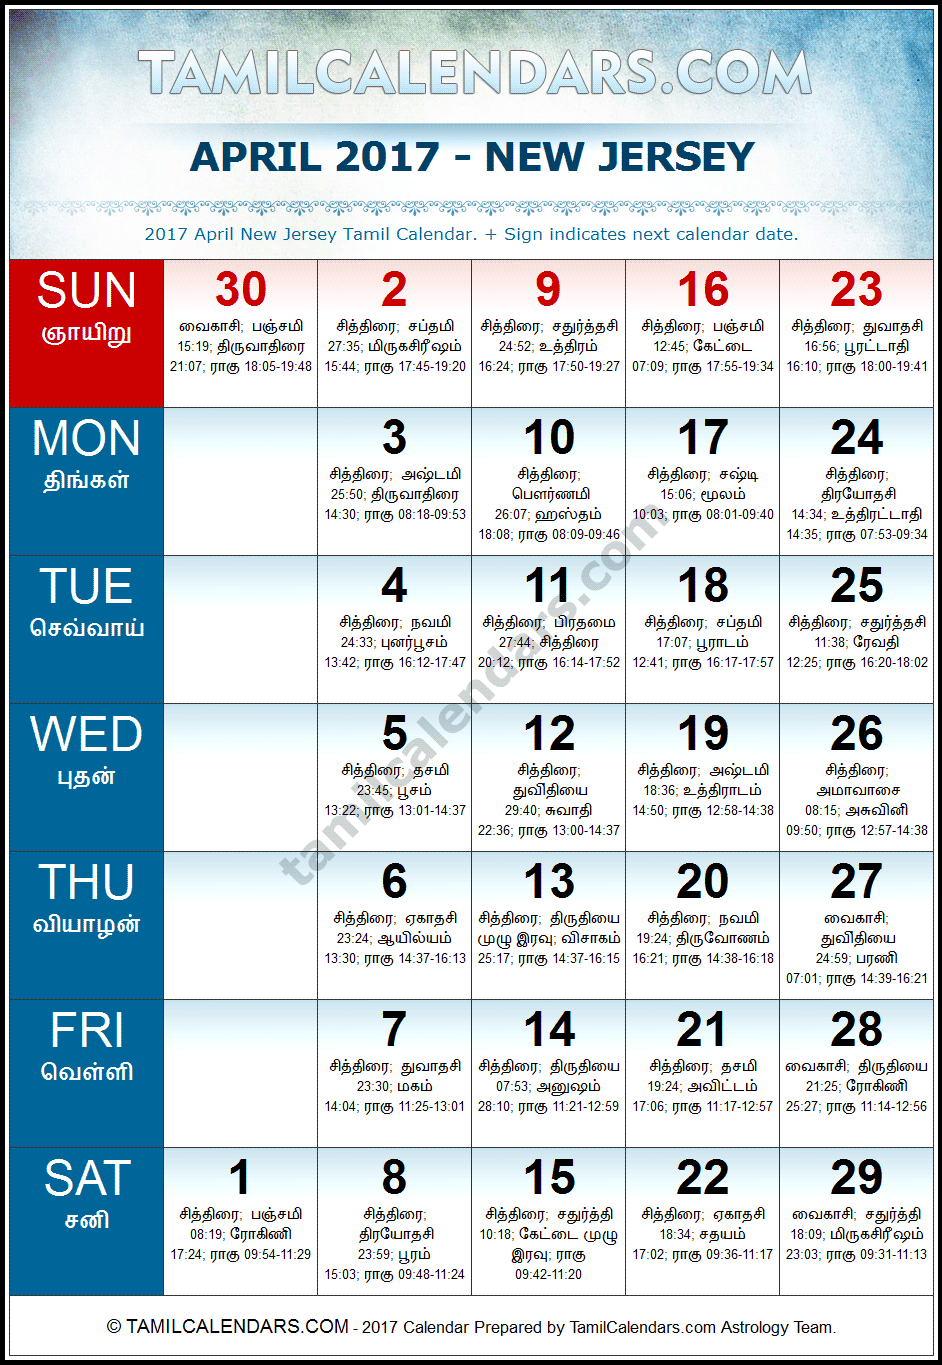 April 2017 Tamil Calendar for New Jersey, USA